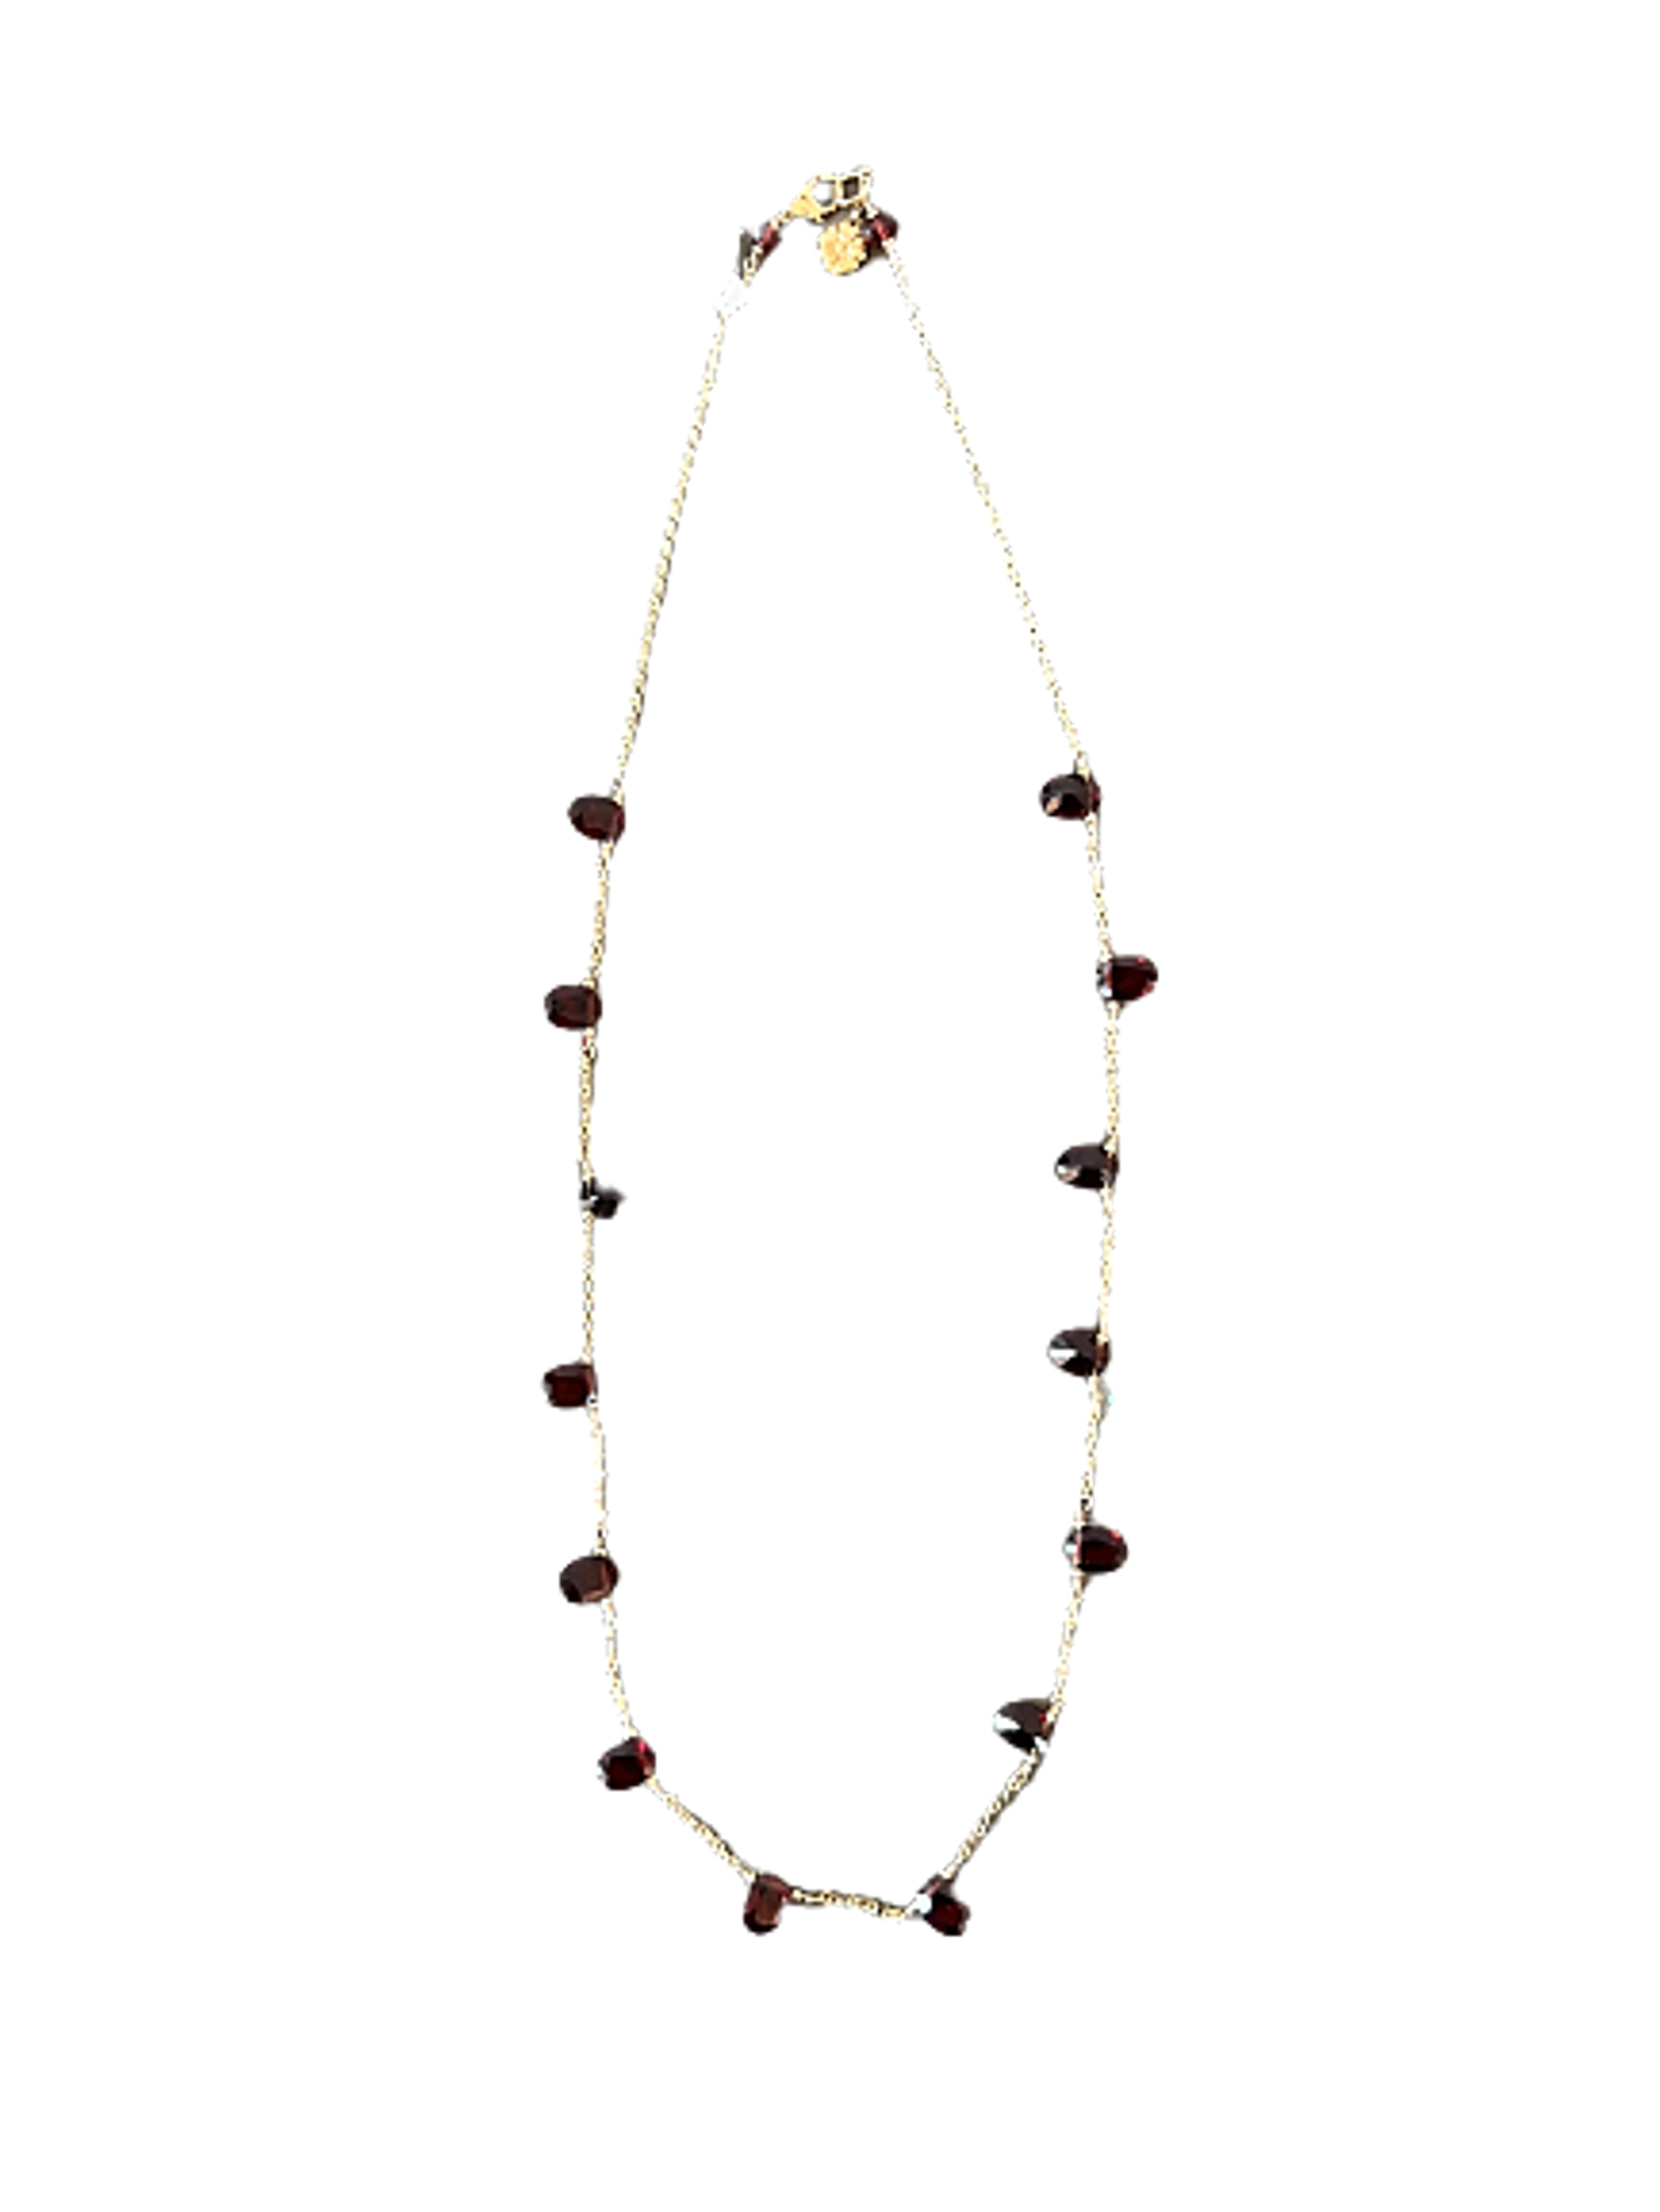 Garnet Briolette Necklace - 14K Gold Filled Chain by Melinda Lawton Jewelry